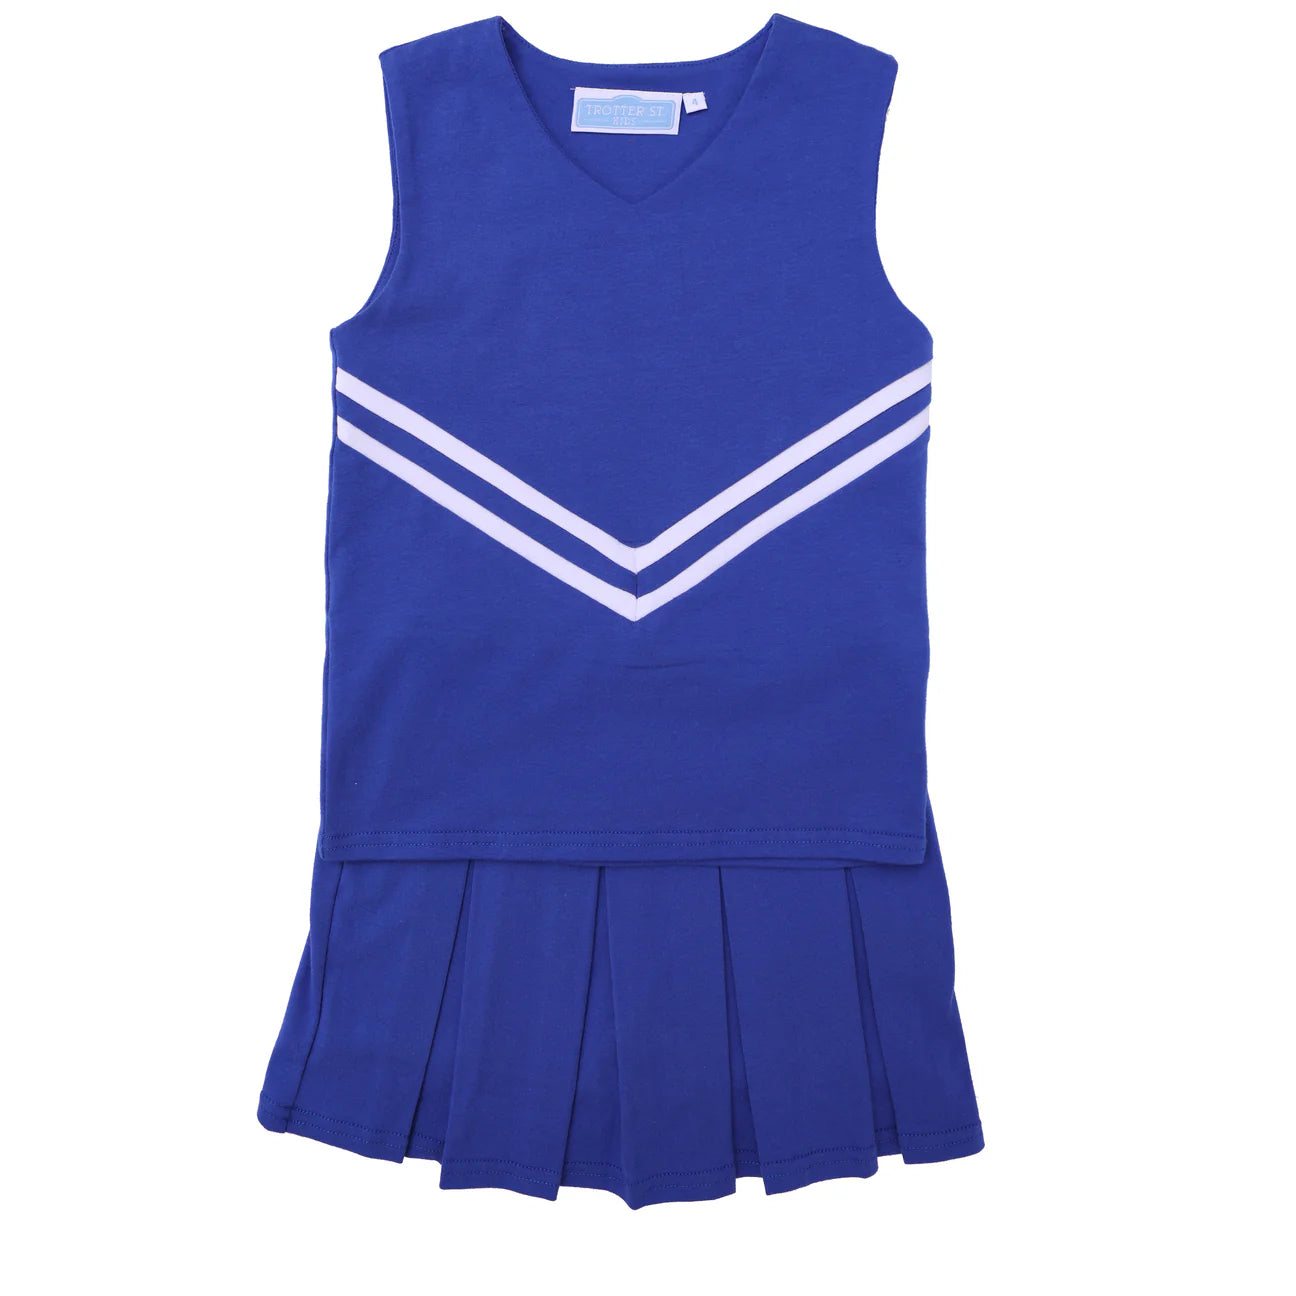 Royal Blue Cheer Uniform